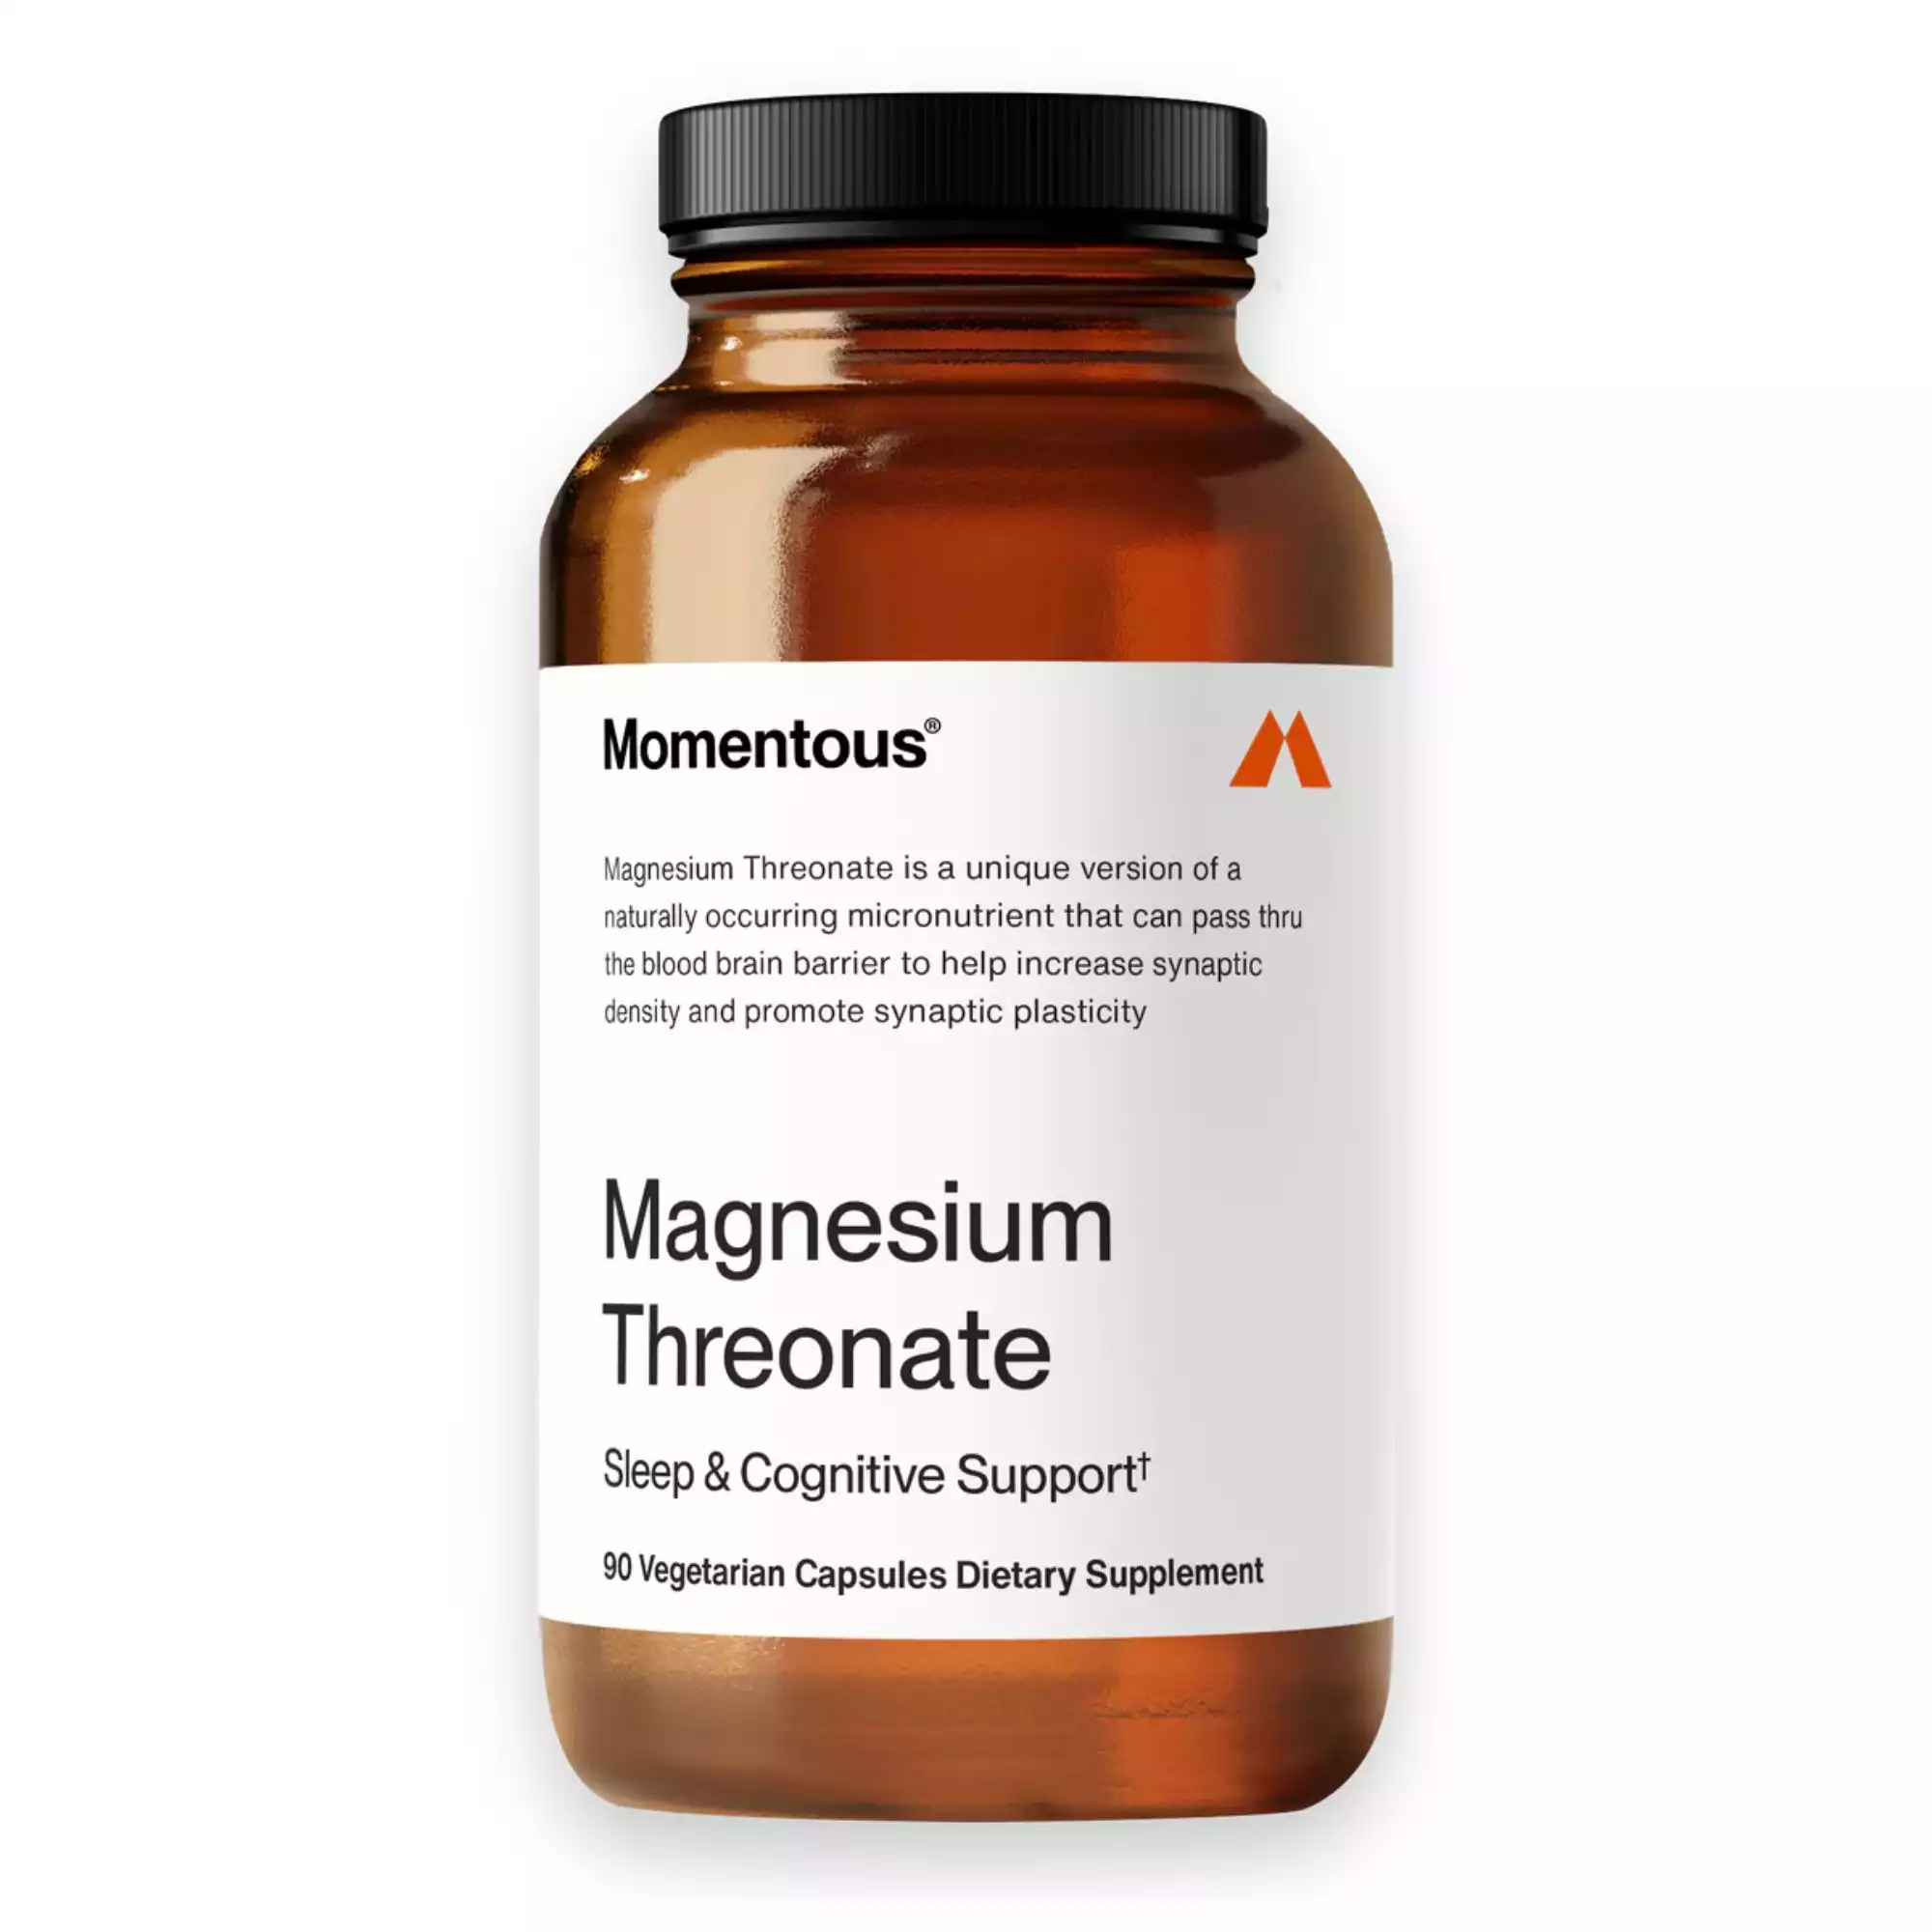 Momentous Magnesium Threonate